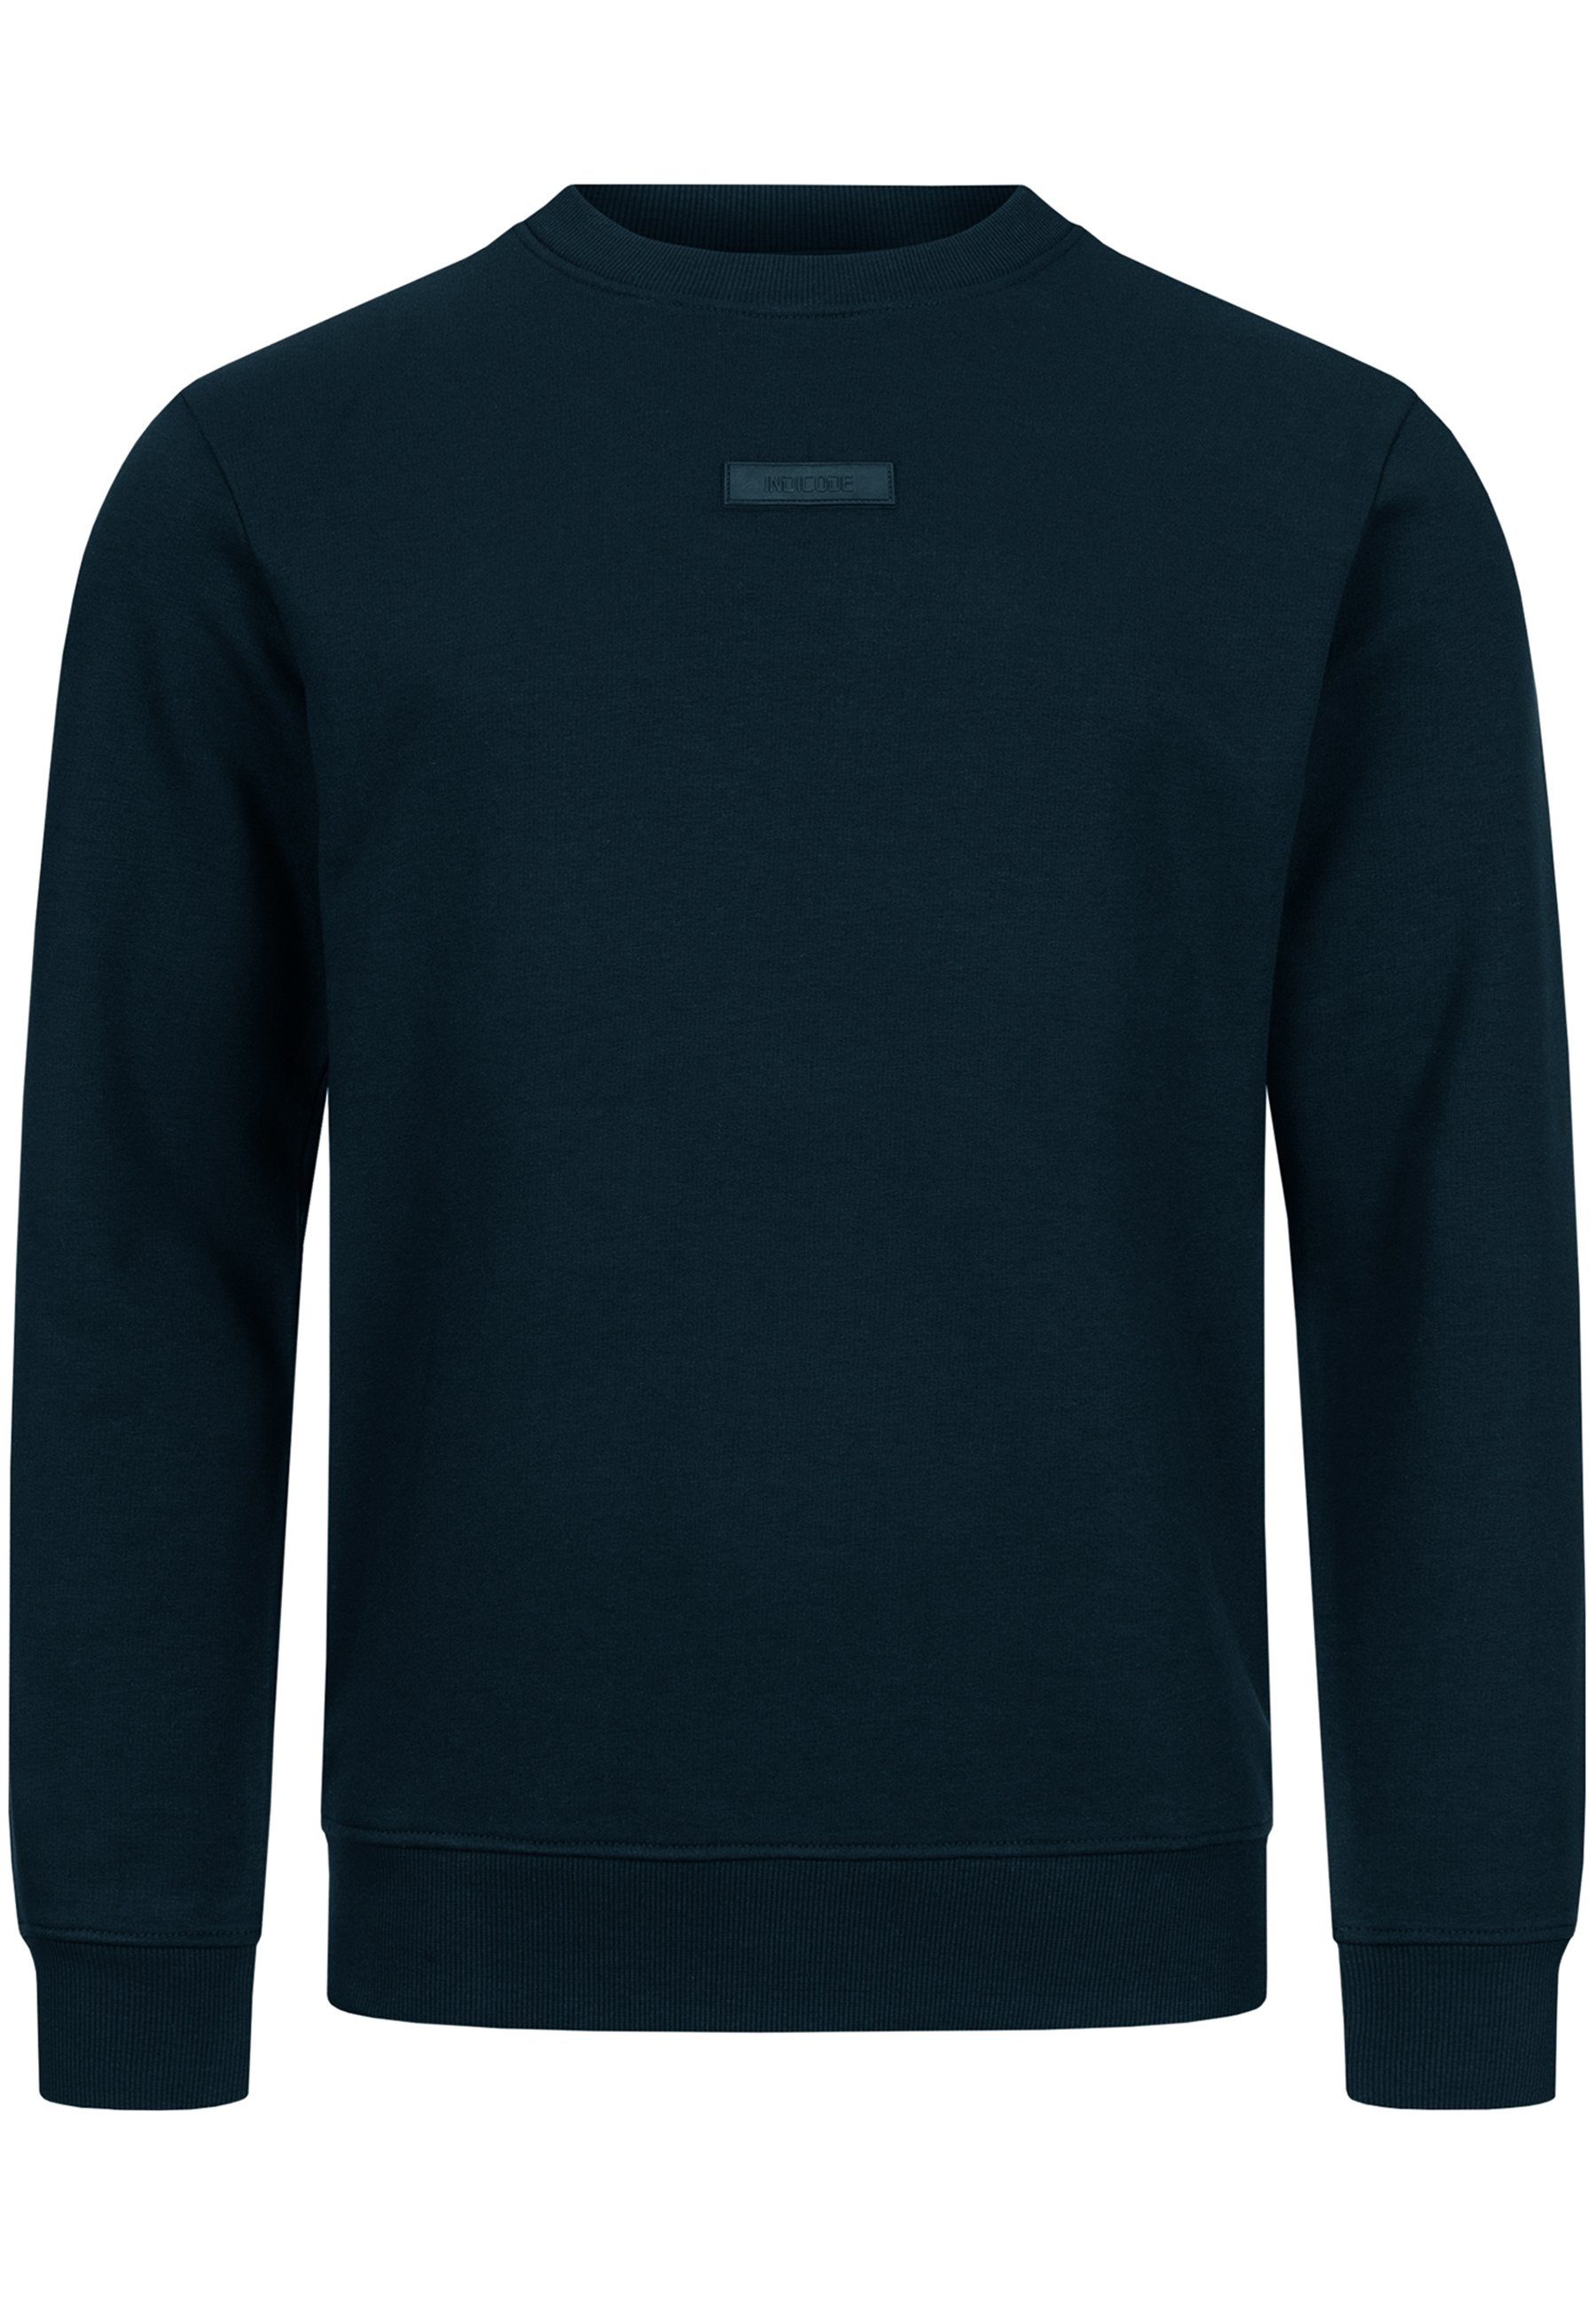 Indicode Sweater Baxter Navy